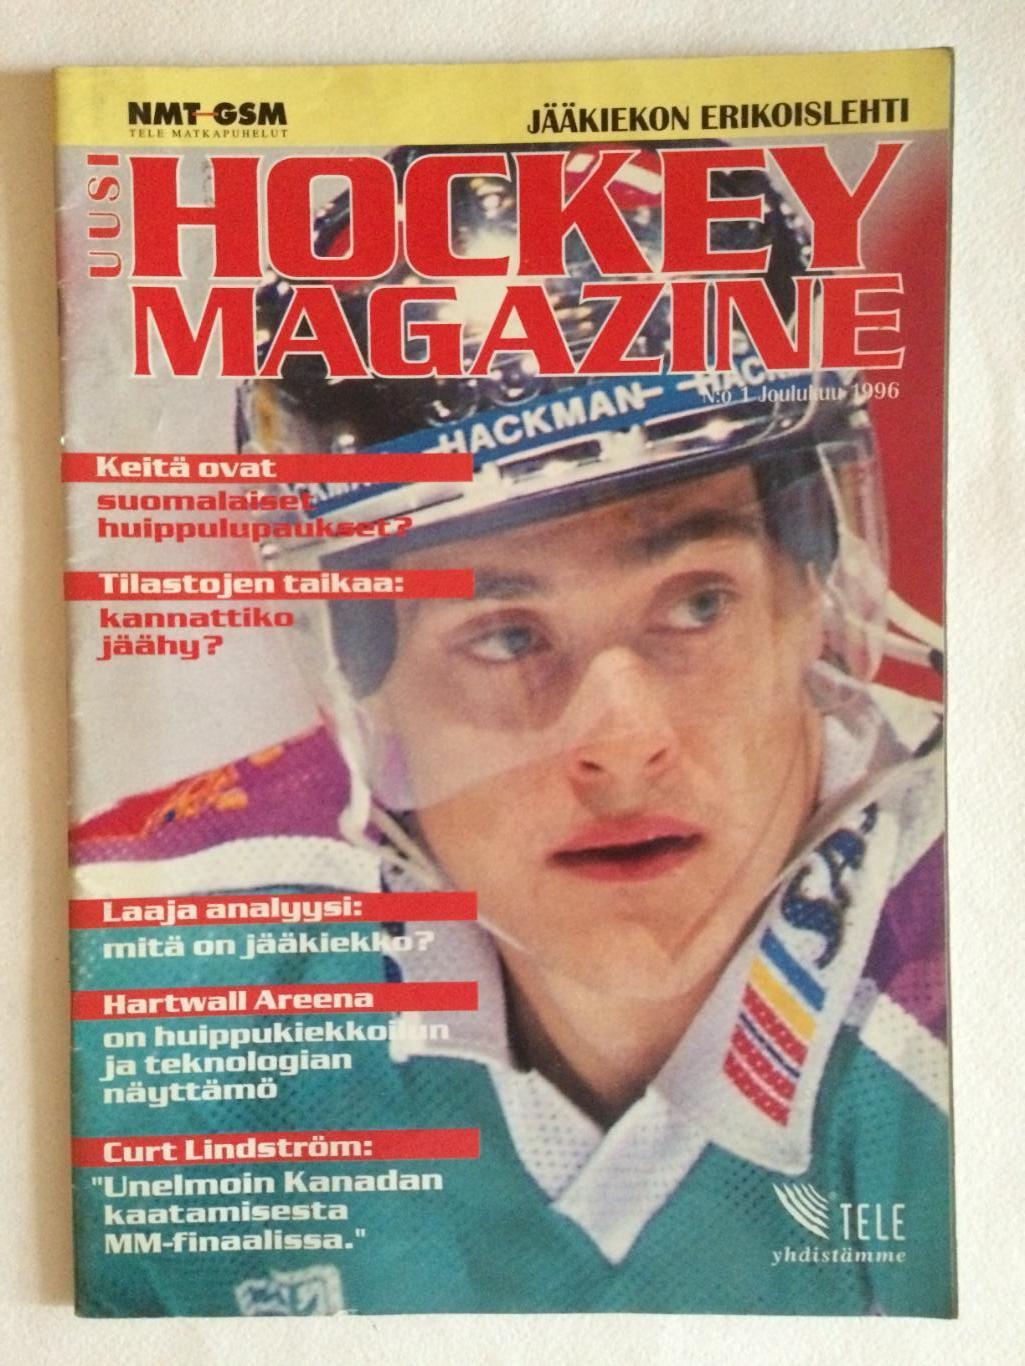 Журнал Хоккей магазин №1 1996 Финляндия